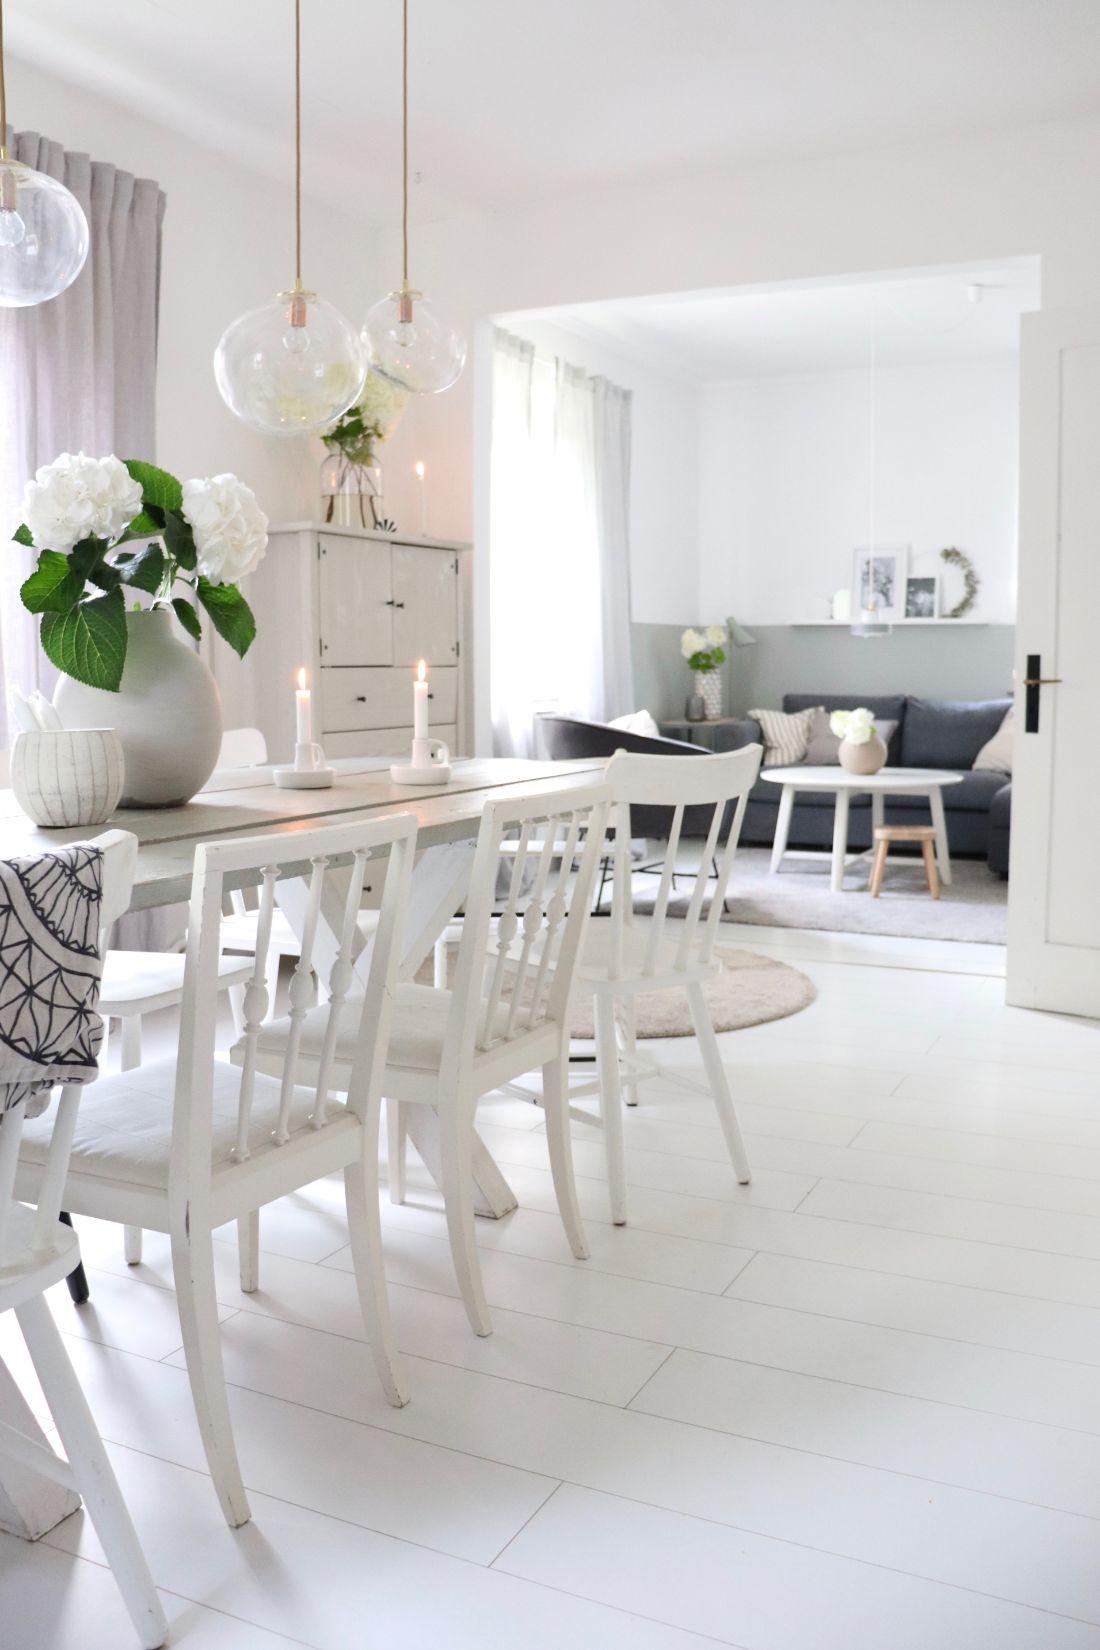 Hortensien in jeder Vase 🤍

#brittabloggt #livingroom #diningroom #white #hydrangeas 